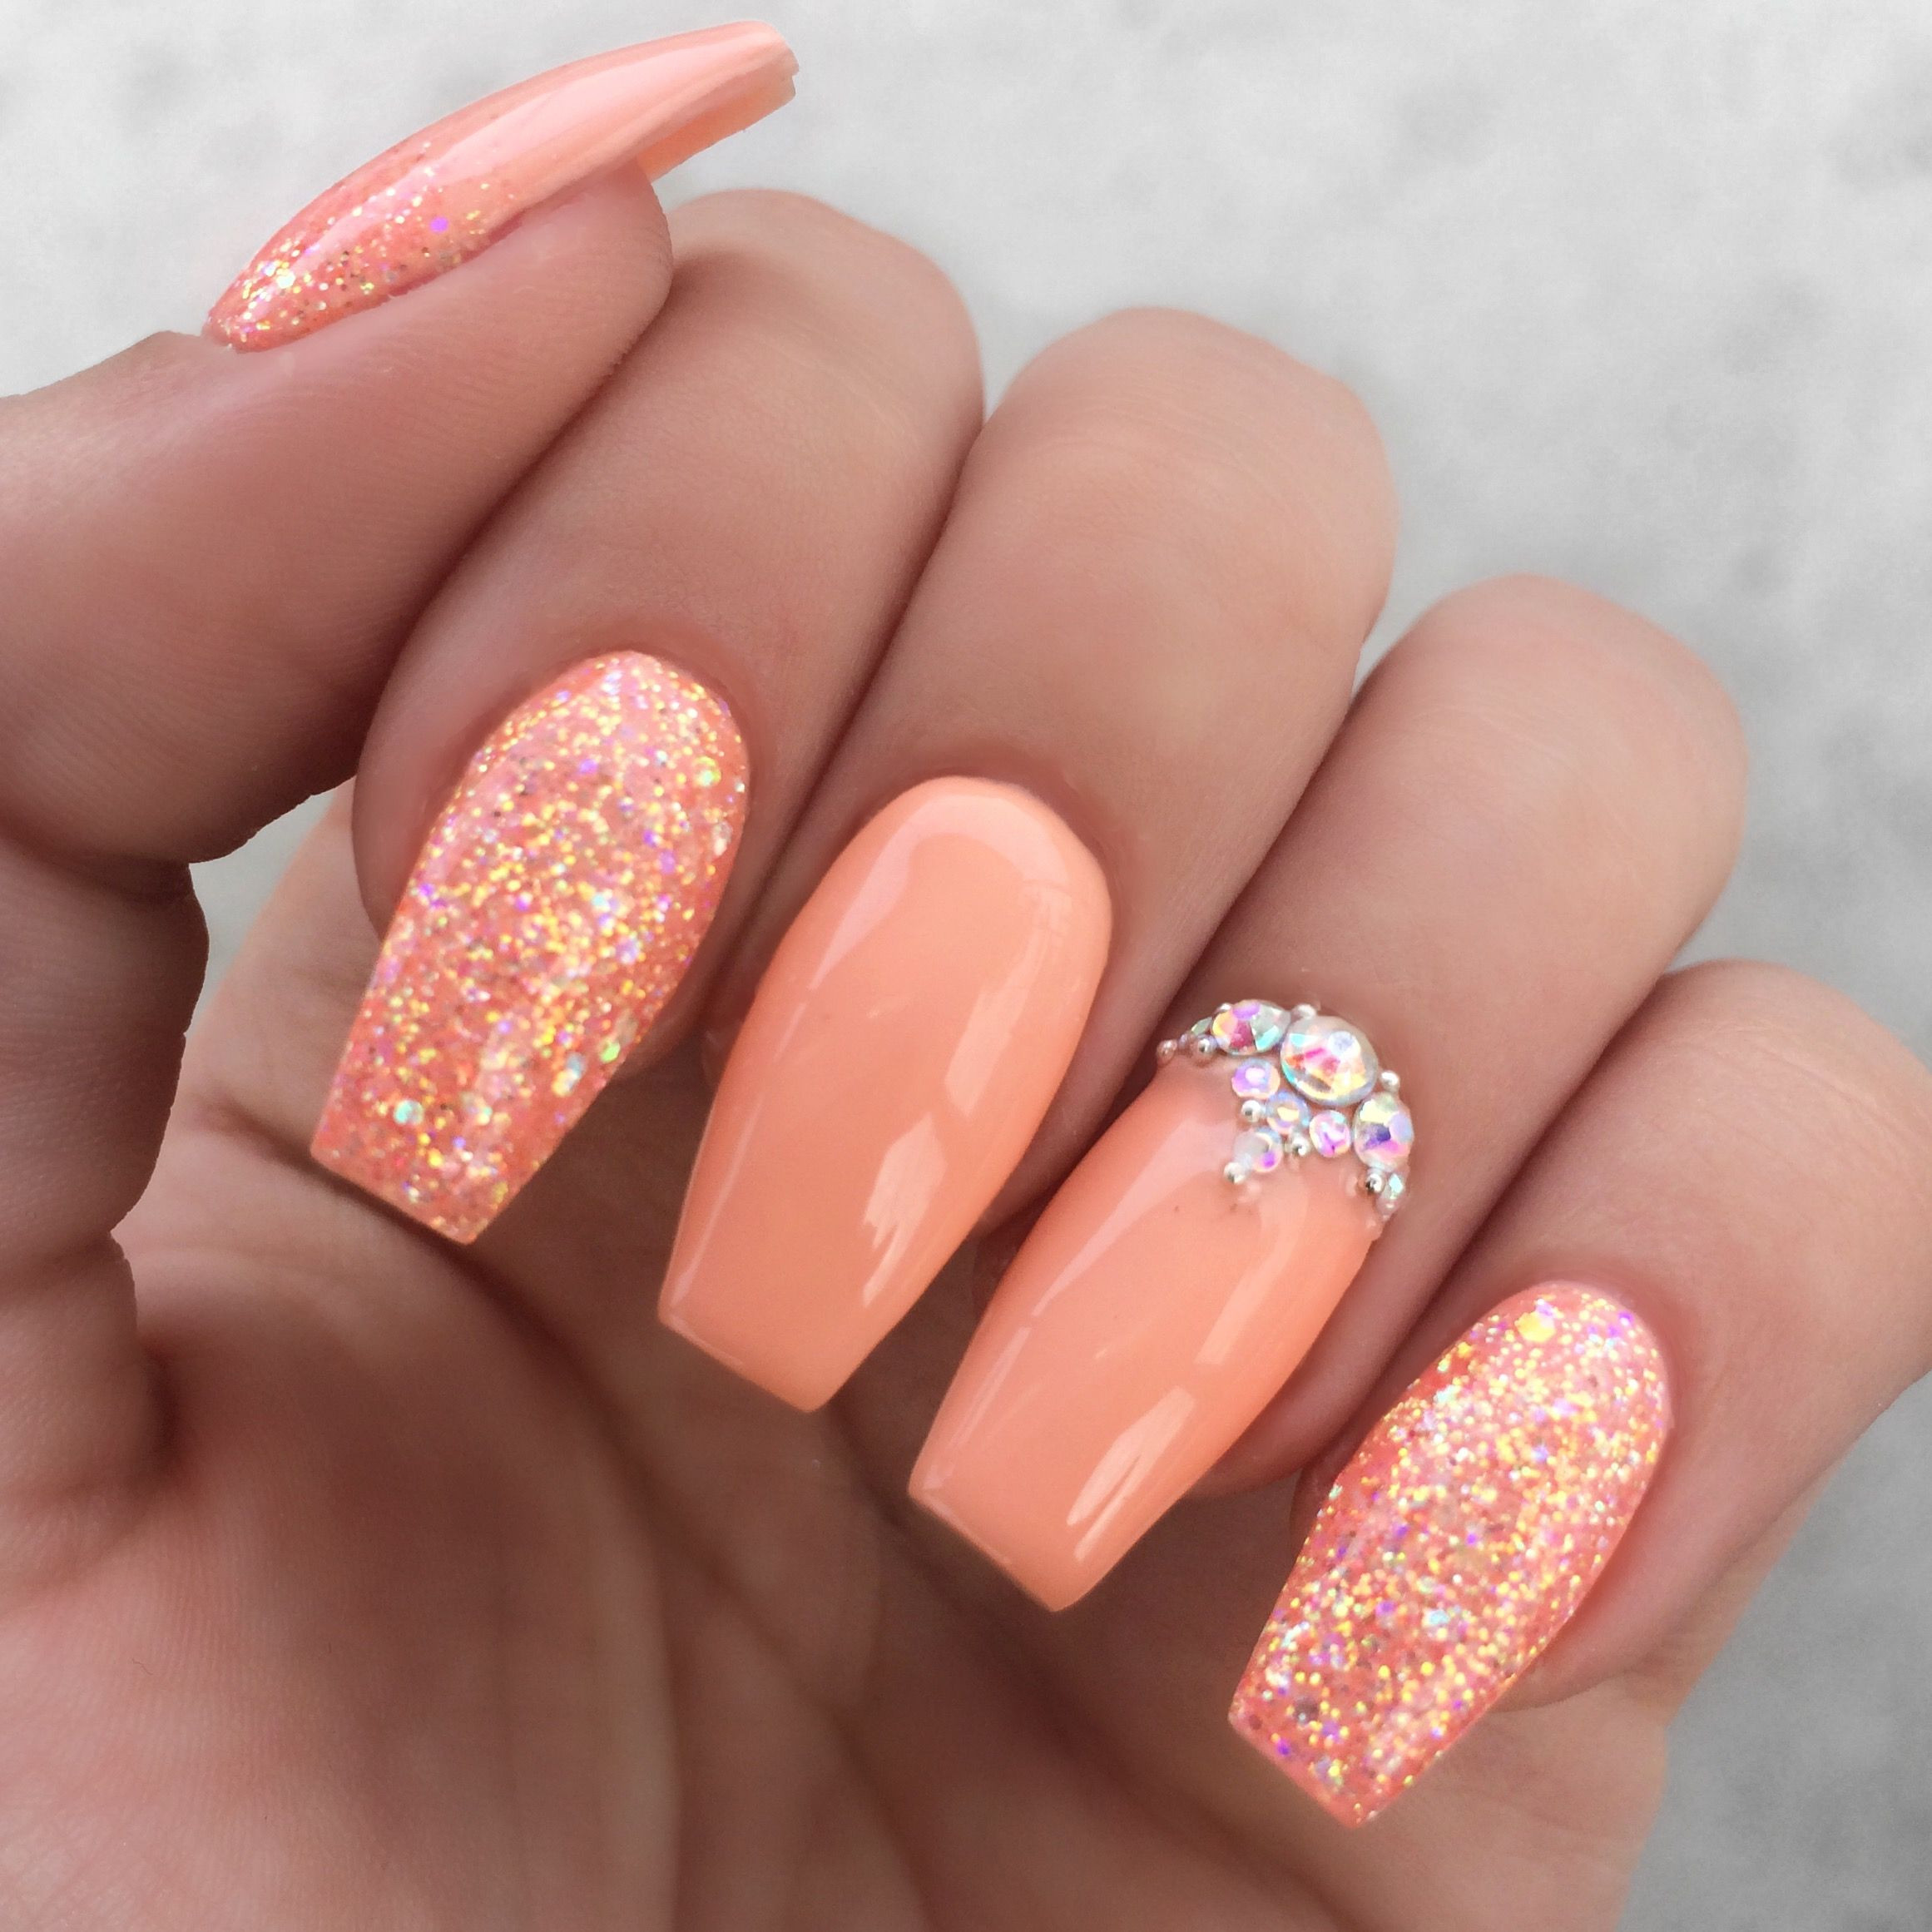 Peach Color Nail Designs
 Girly peach glitter rhinestone nails in 2019